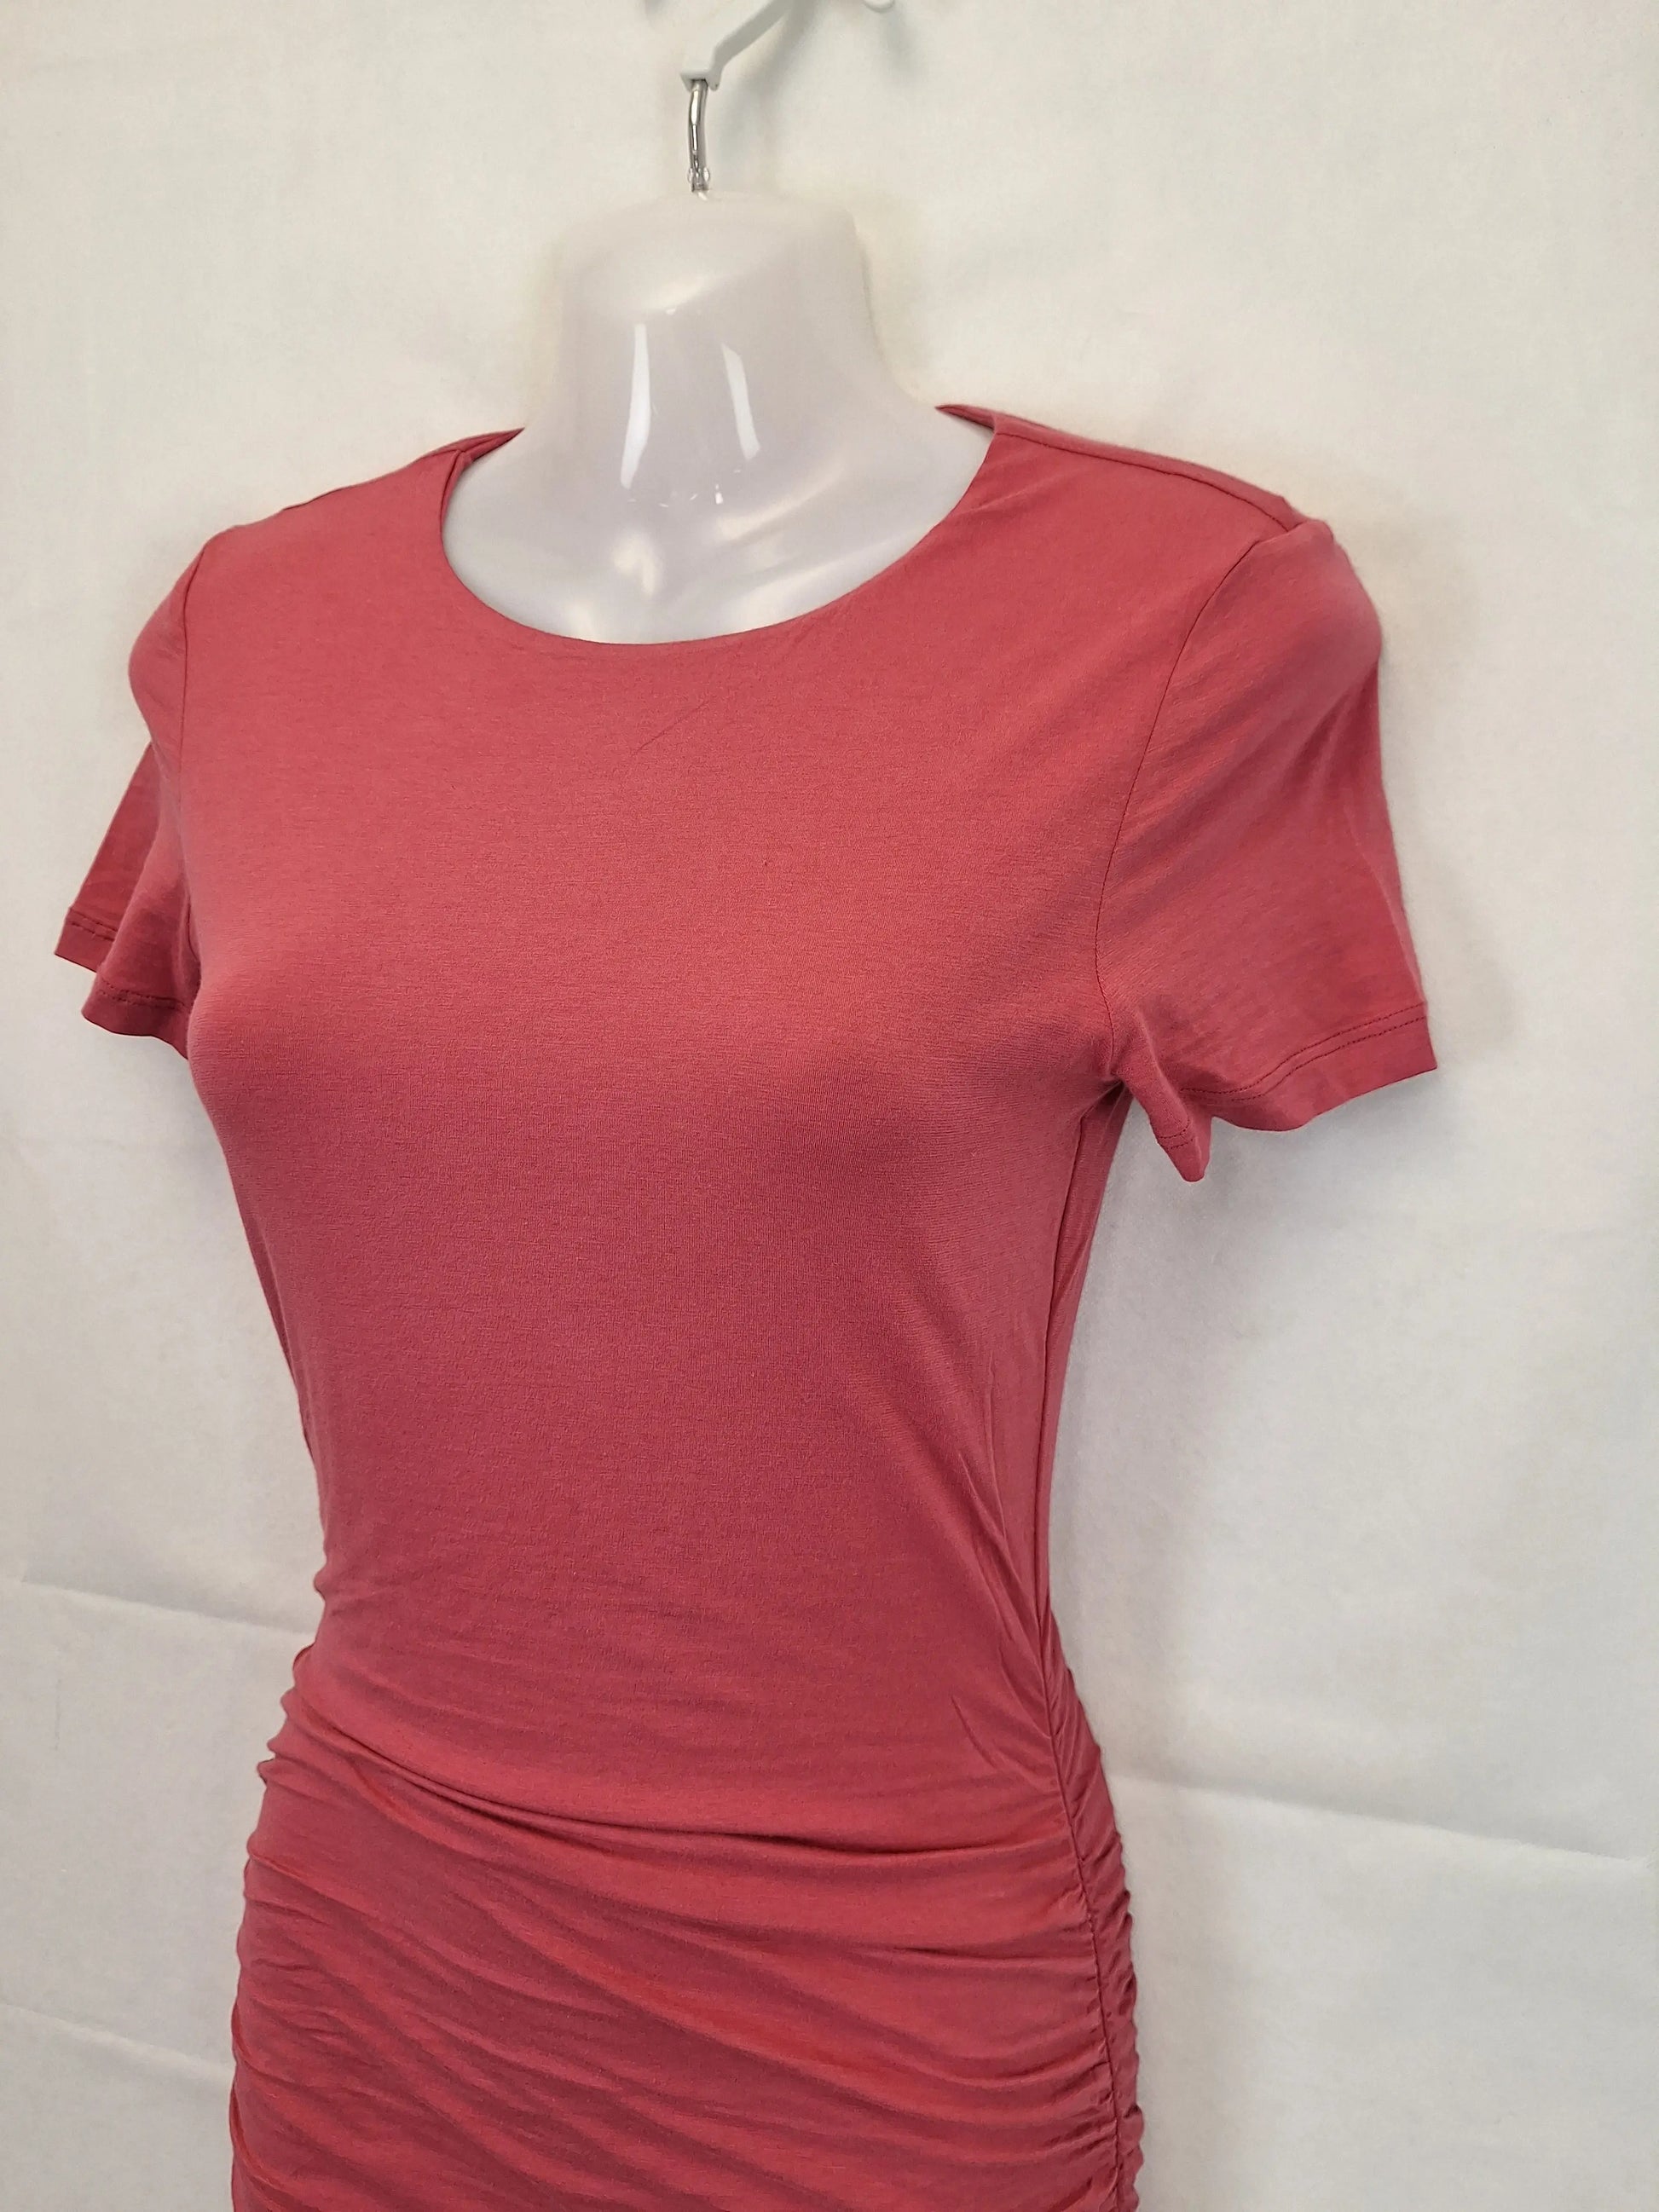 Kookai Berry Basic T-shirt Midi Dress Size 8 – SwapUp